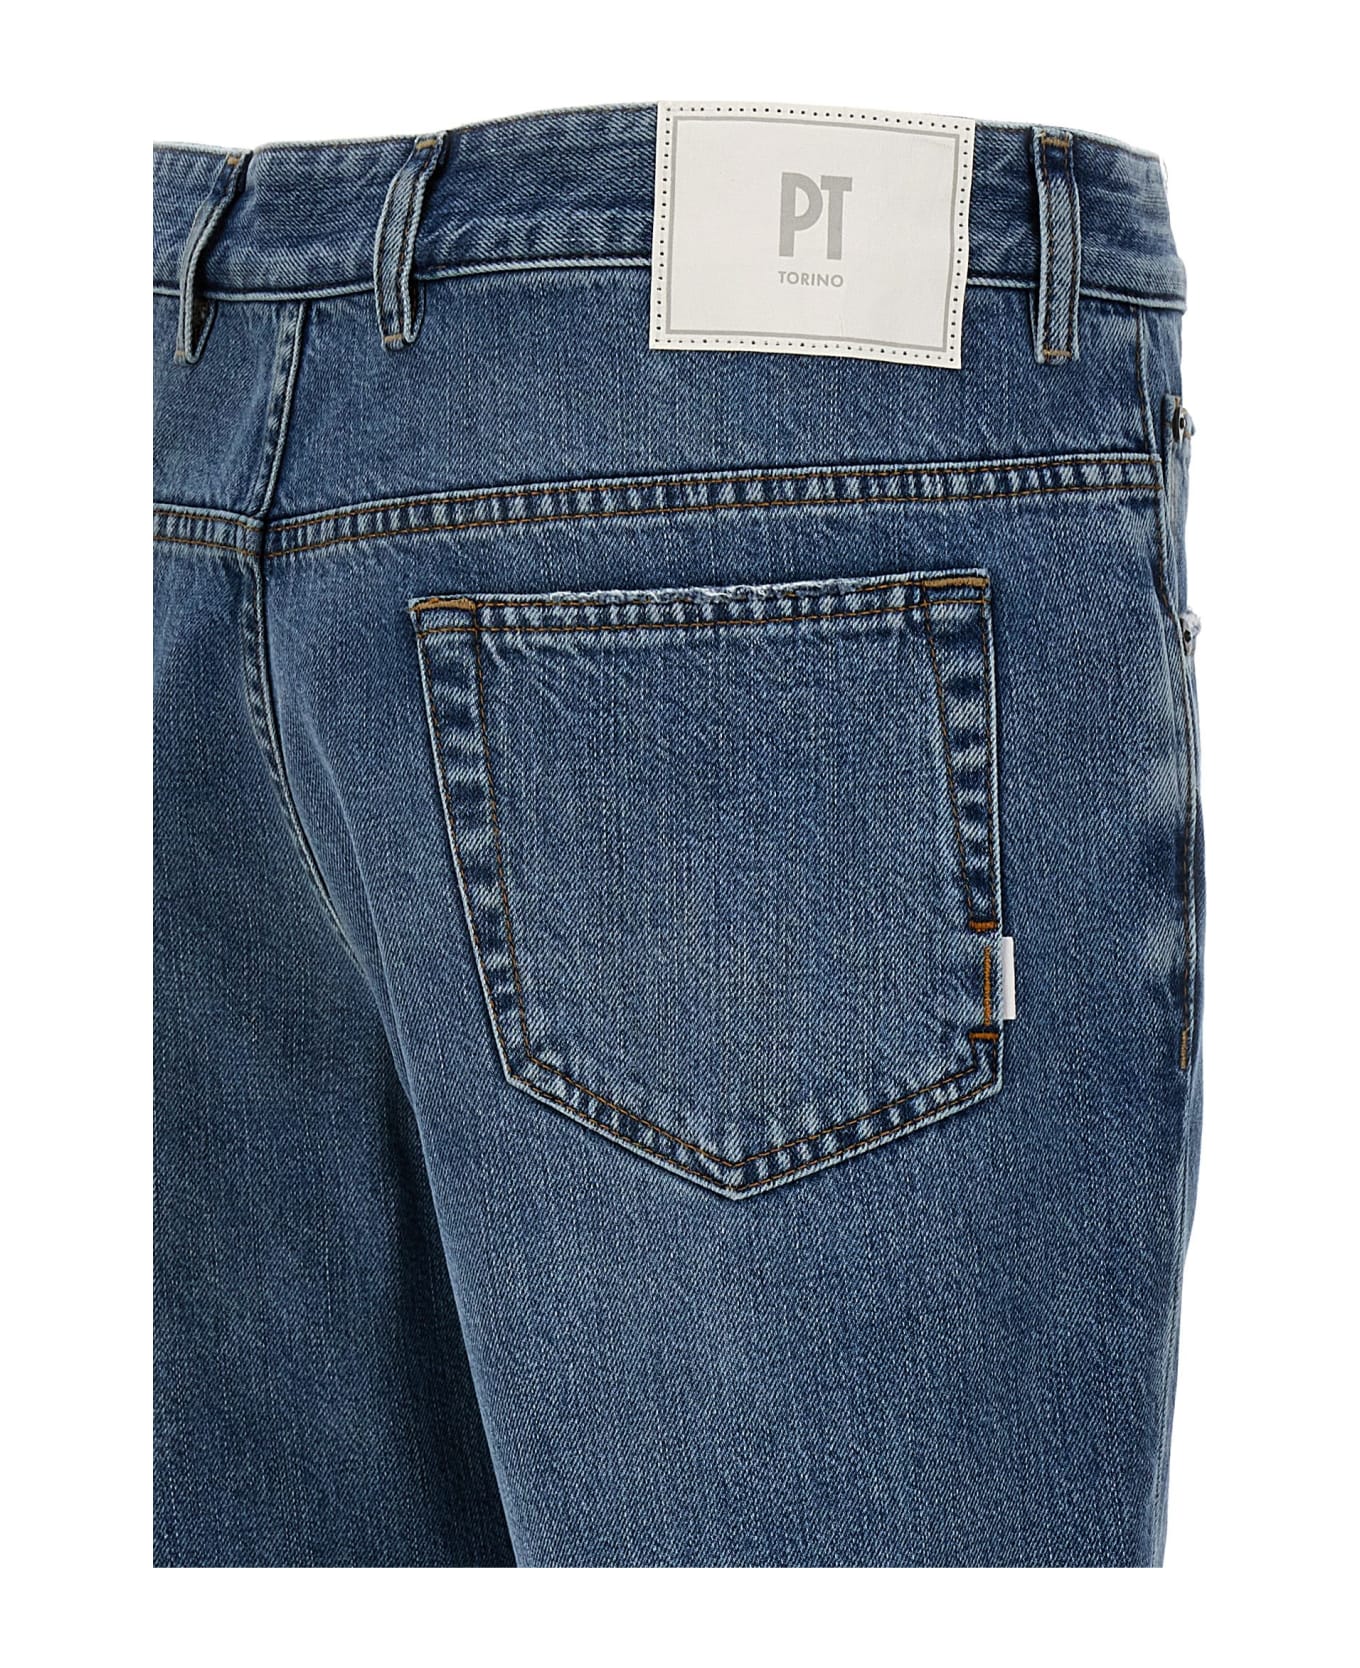 PT Torino 'rebel' Jeans - CHIARO